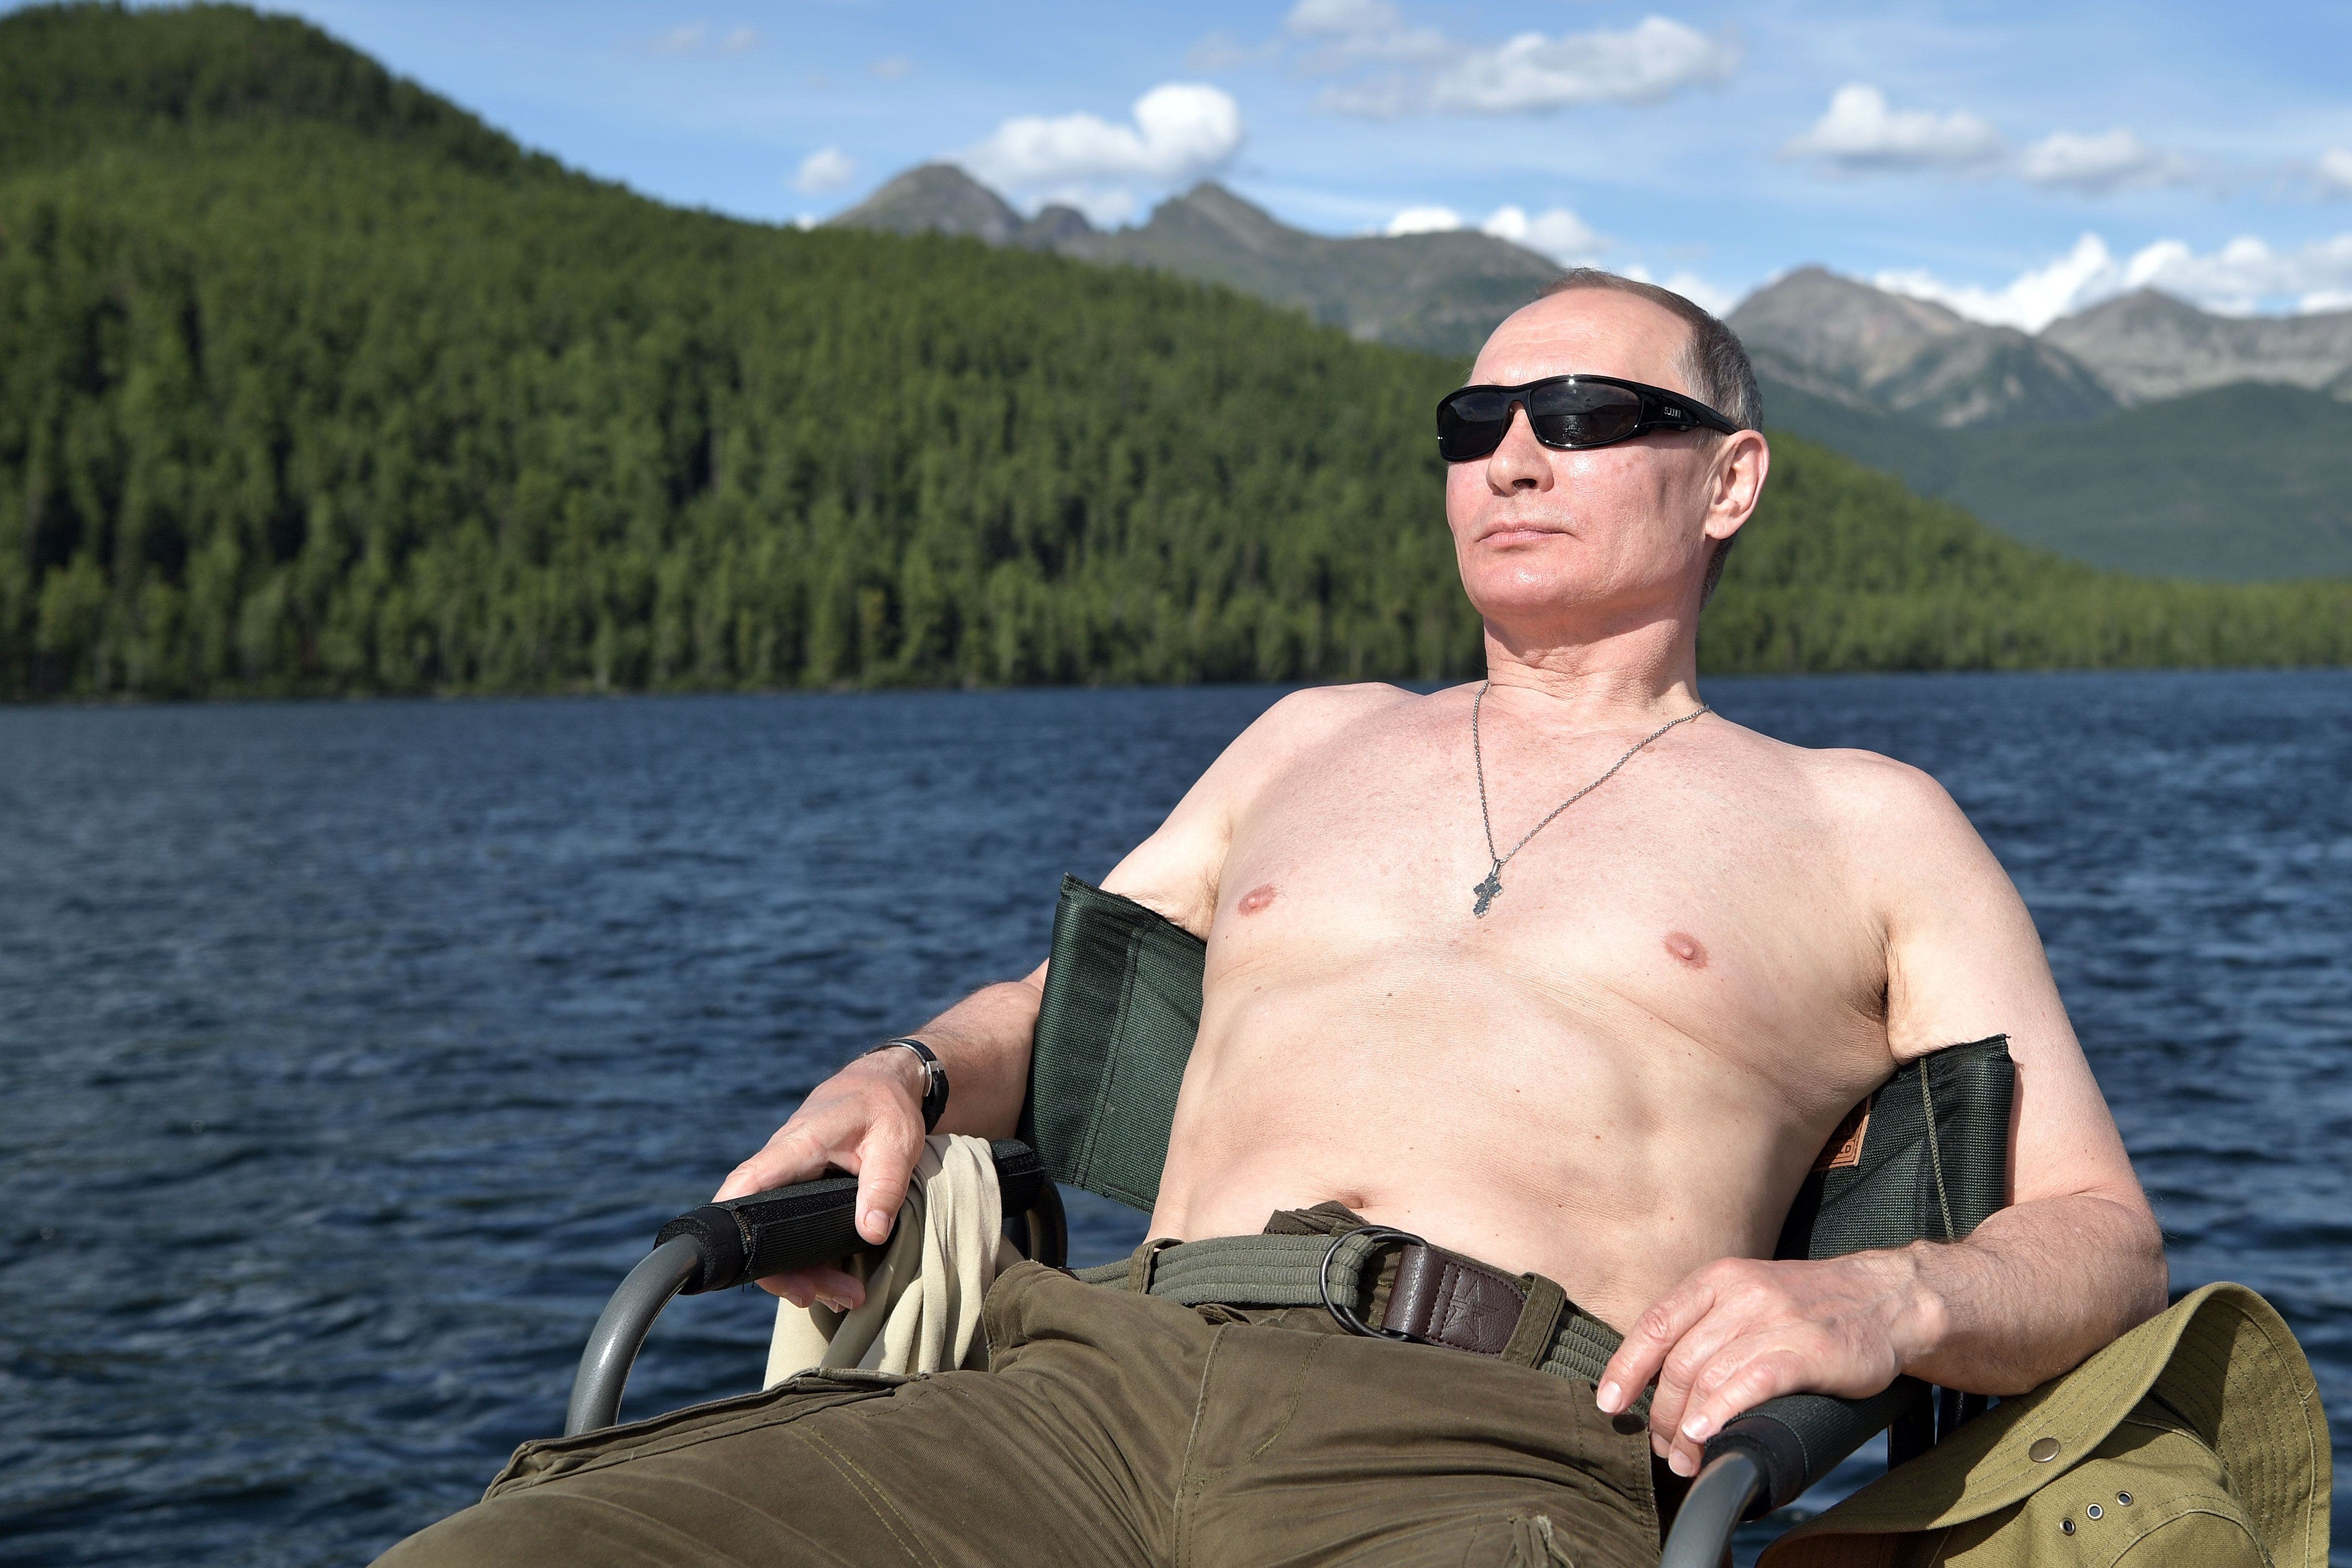 Y Putin se volvió a quitar la camiseta